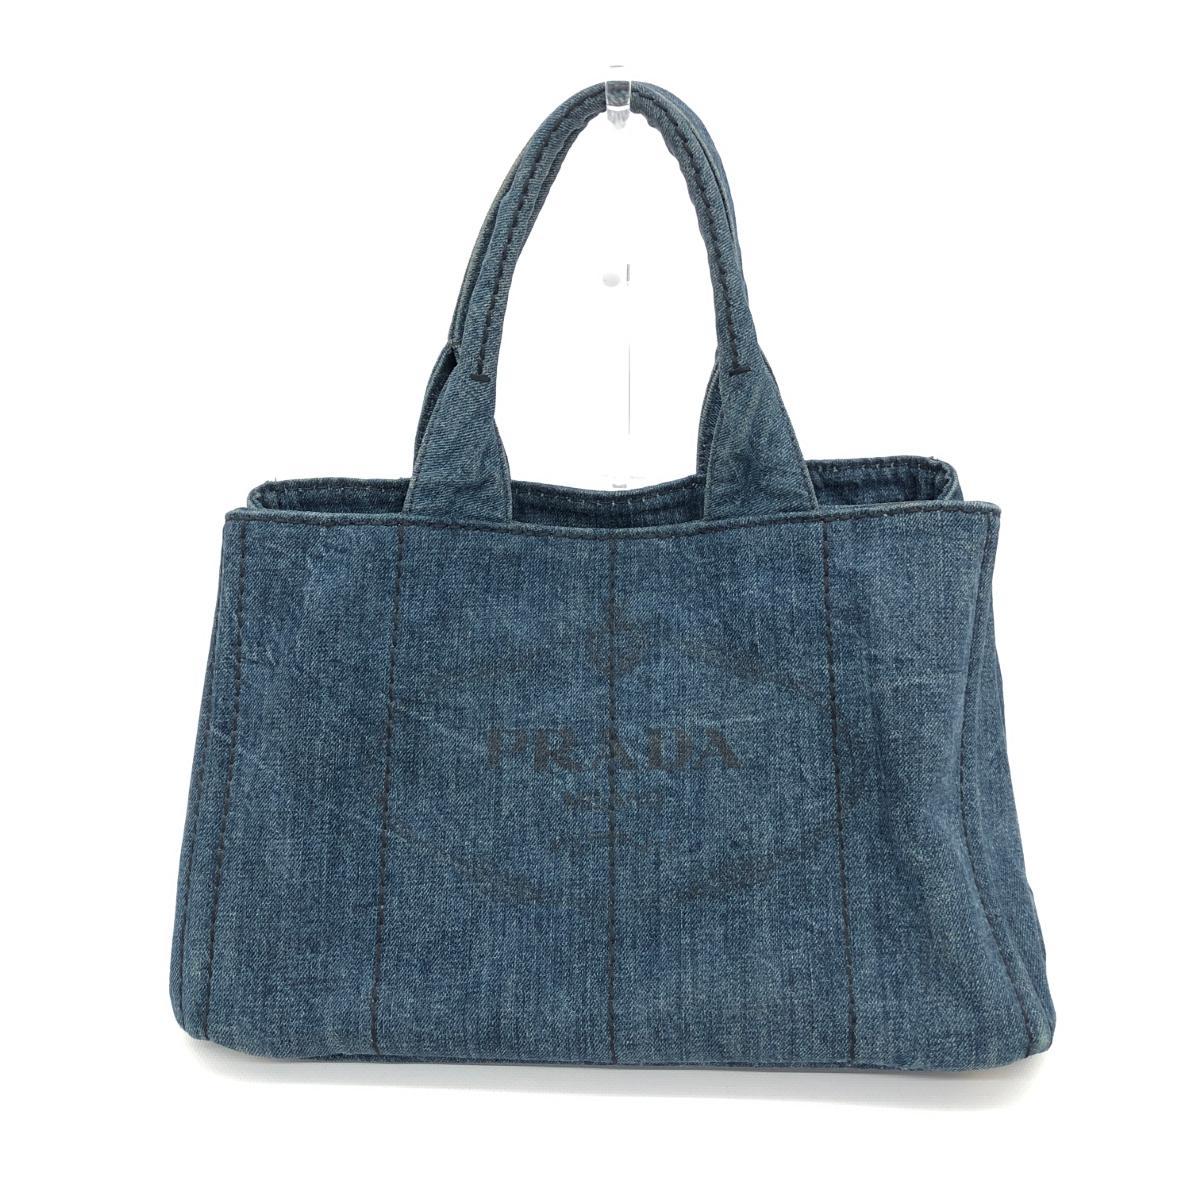 ◆PRADA プラダ カナパトートバッグ◆ ブルー デニム地 ロゴ レディース bag 鞄 B1877B